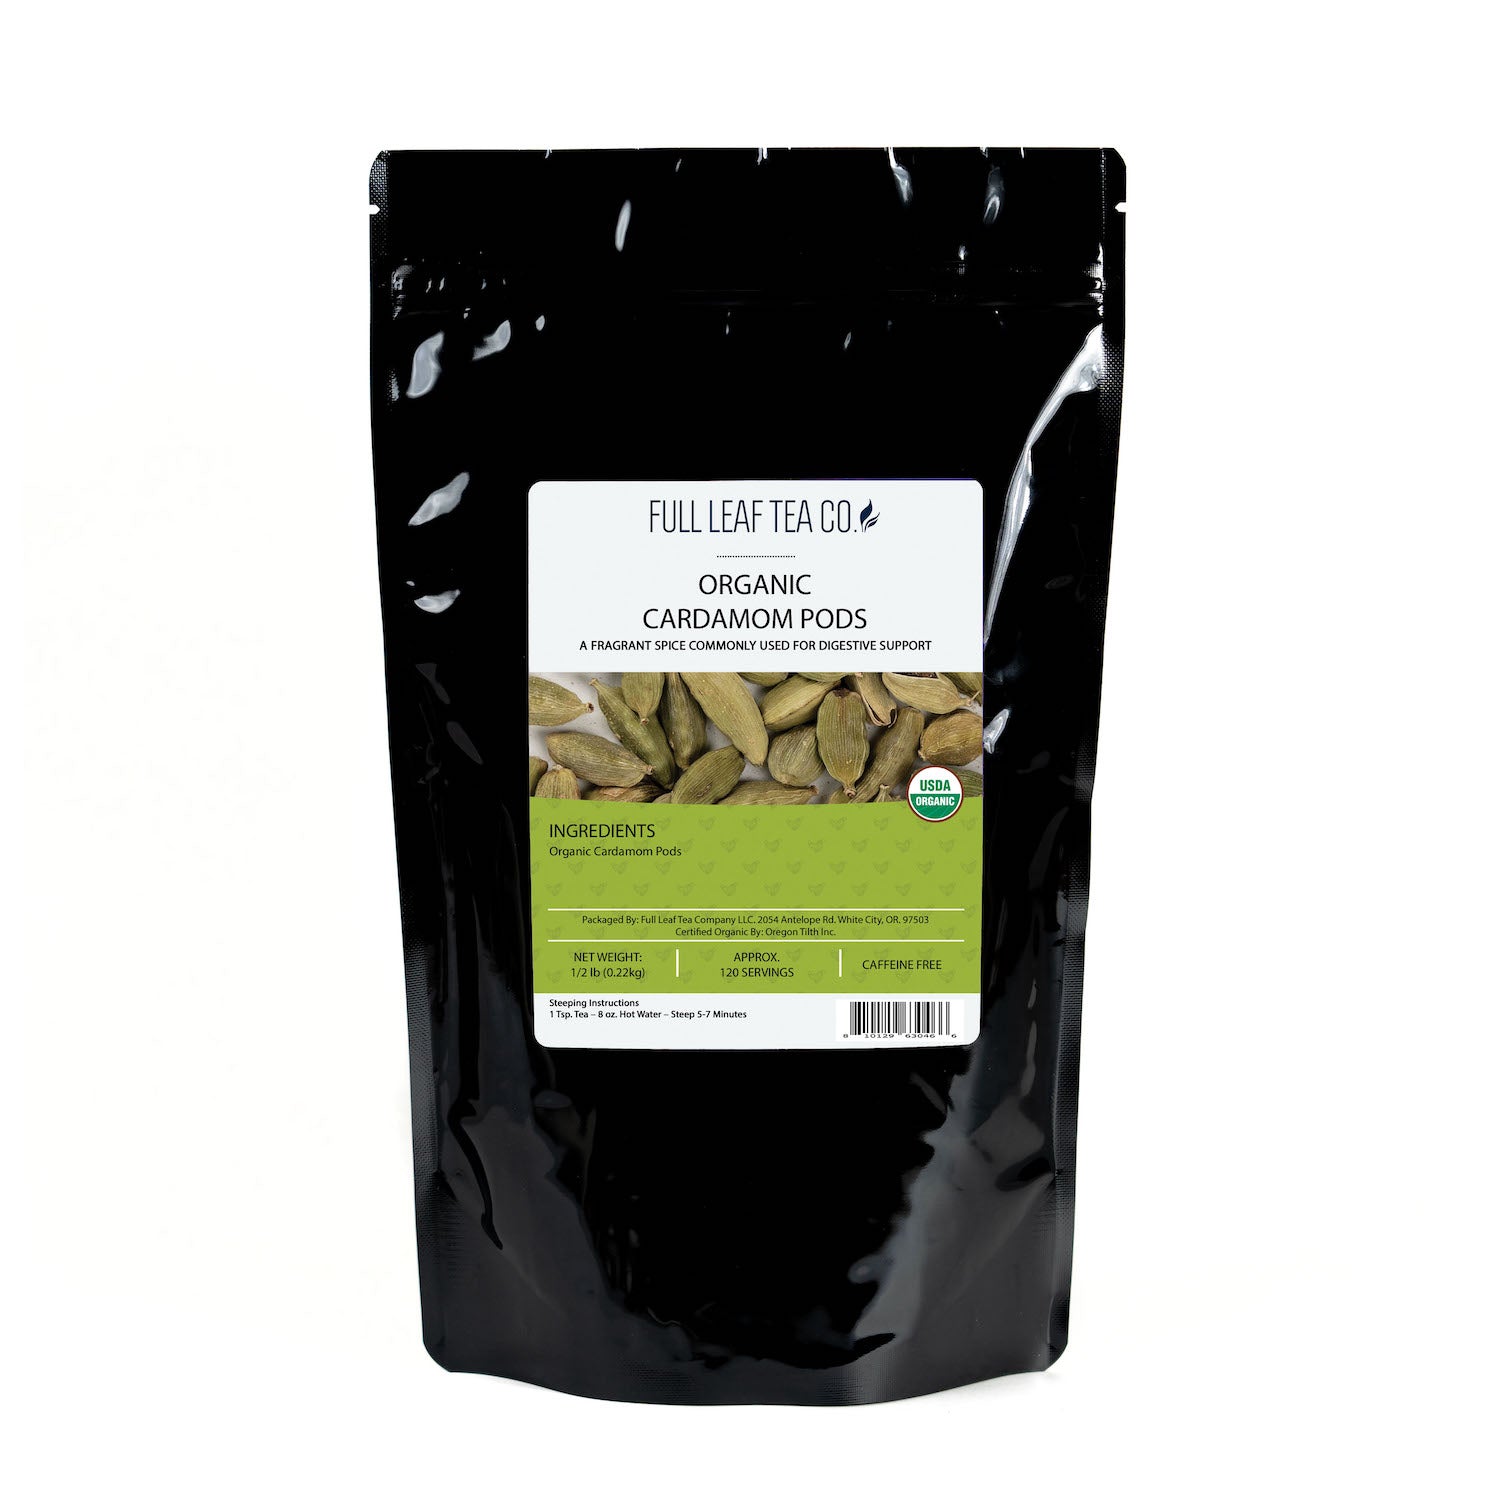 Organic Cardamom Pods - Loose Leaf Tea - Full Leaf Tea Company